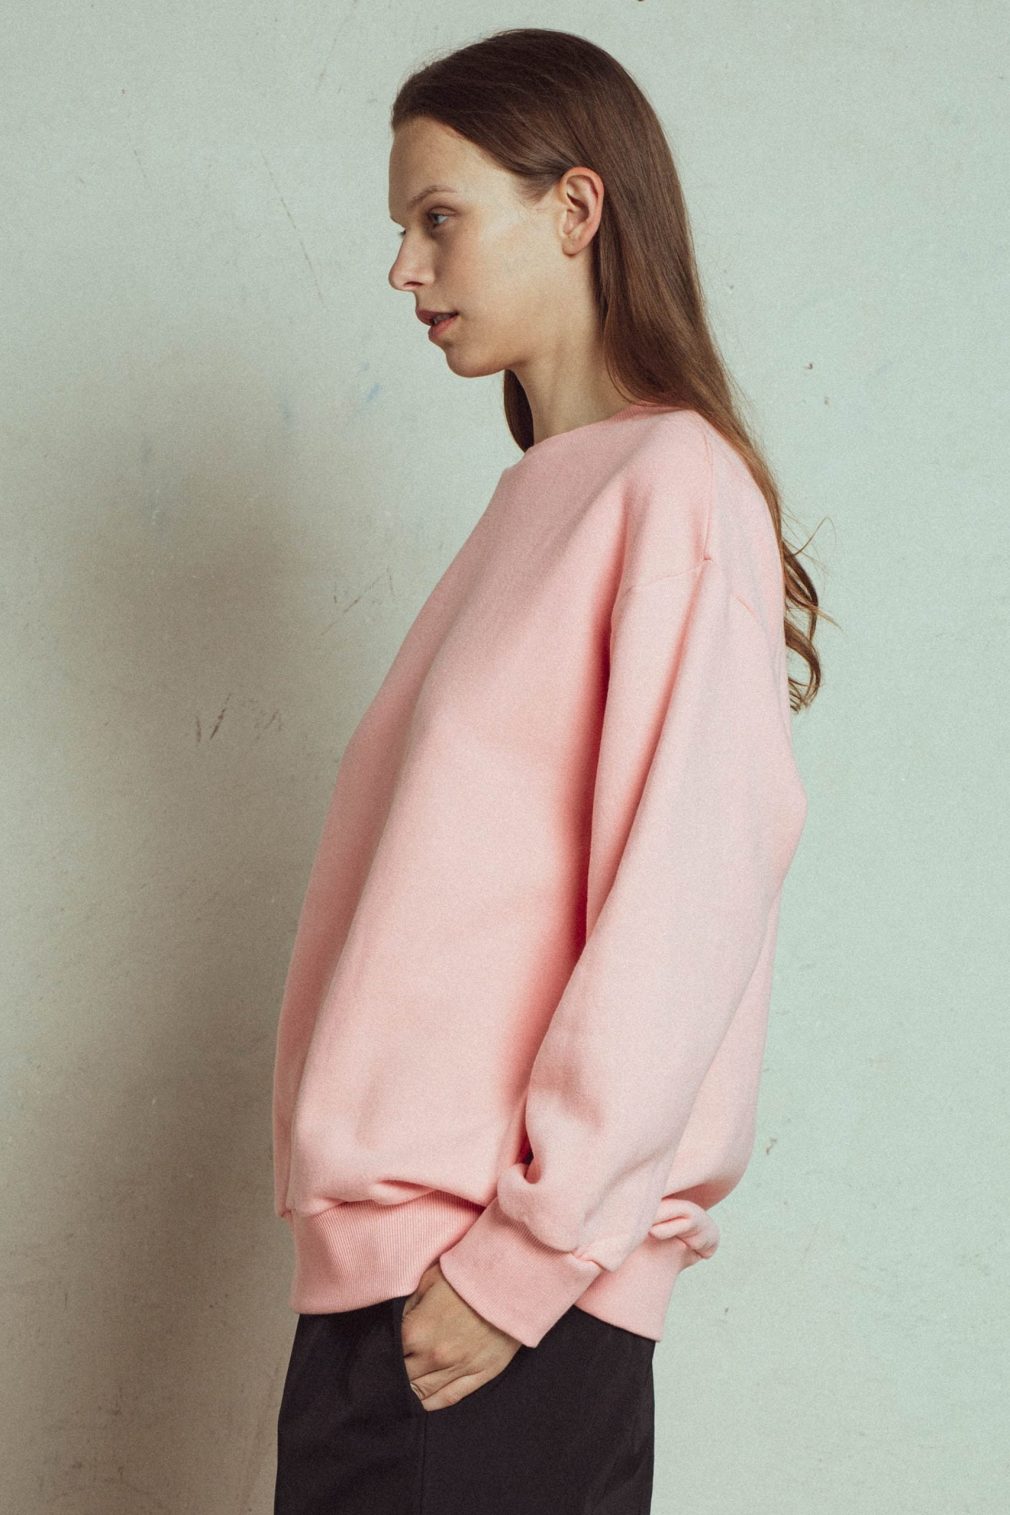 unlabel oversize, round neck pink sweater, hip length, european soft fleece fabric